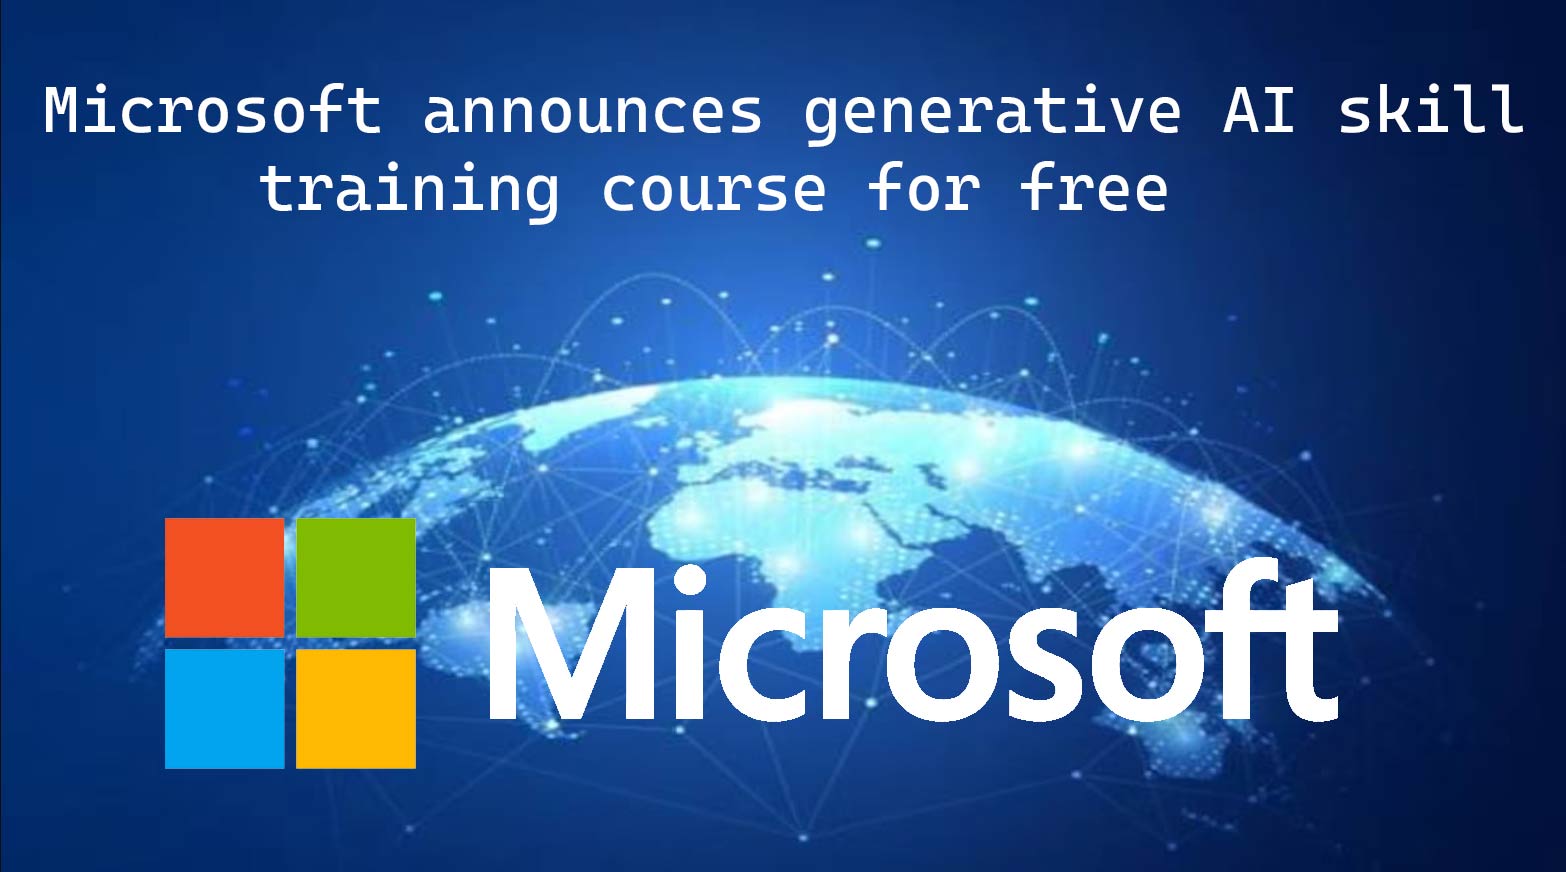 Microsoft has announced a free generative AI skills training course